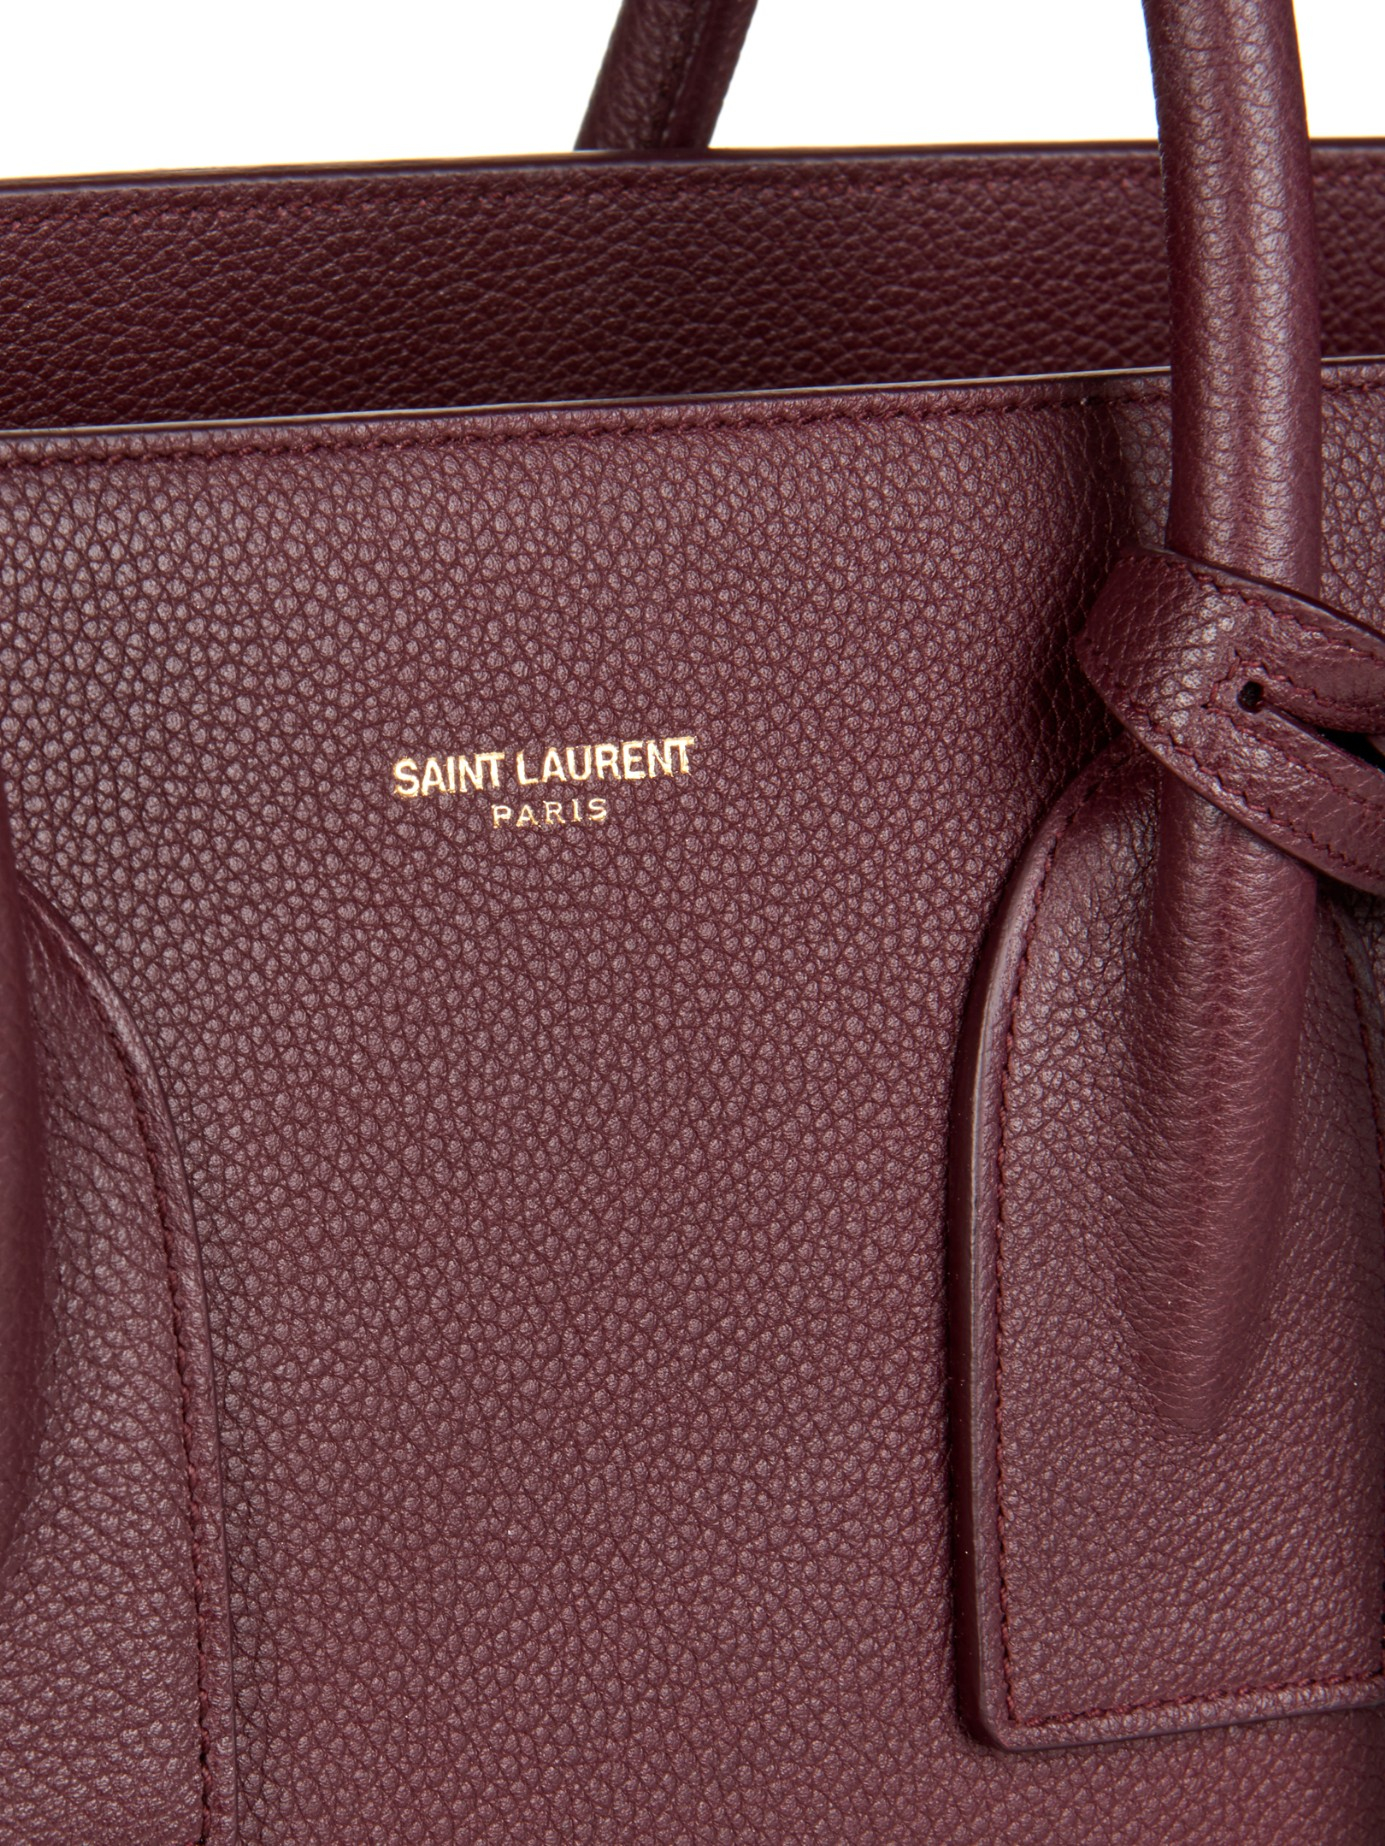 Saint Laurent Classic Sac De Jour Baby Bag In Grained Leather in